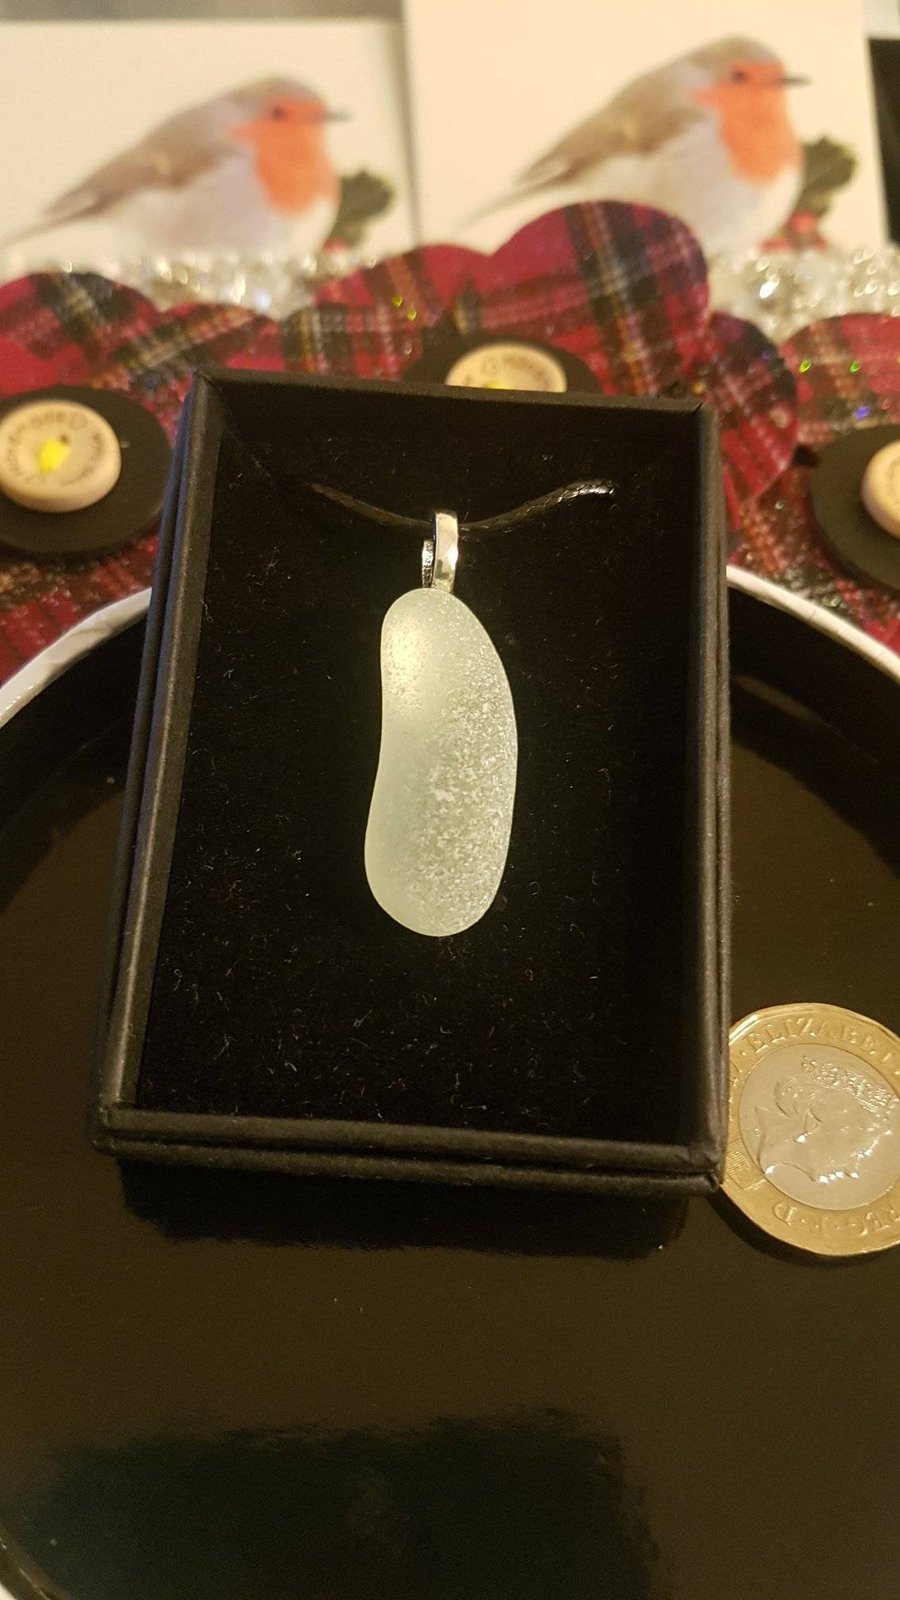 Seaglass pendant